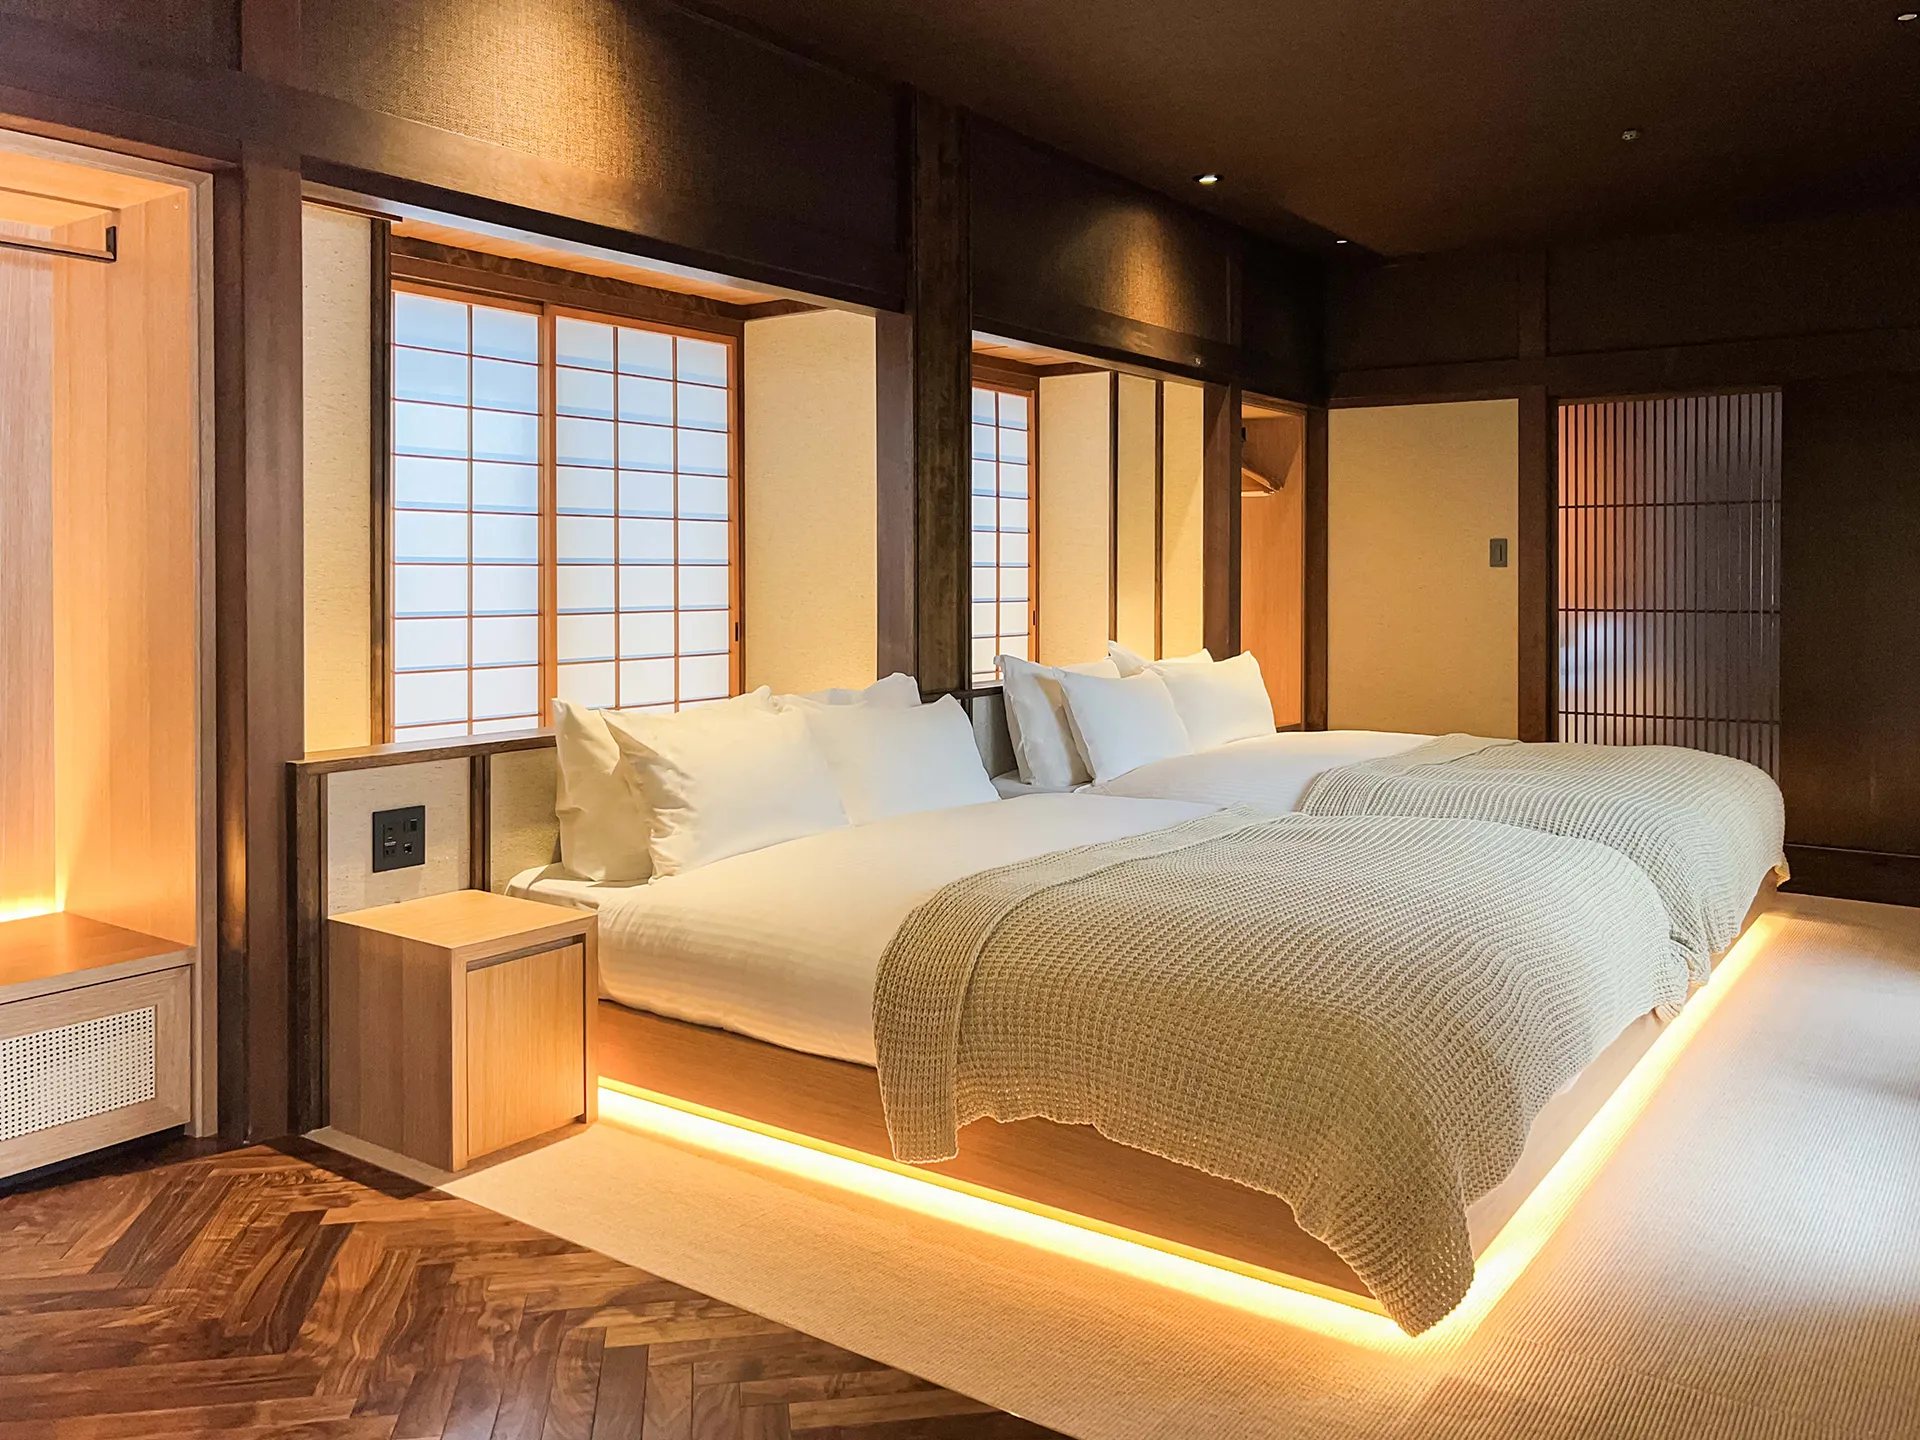 image:間接照明で優しく照らされるベッドルーム